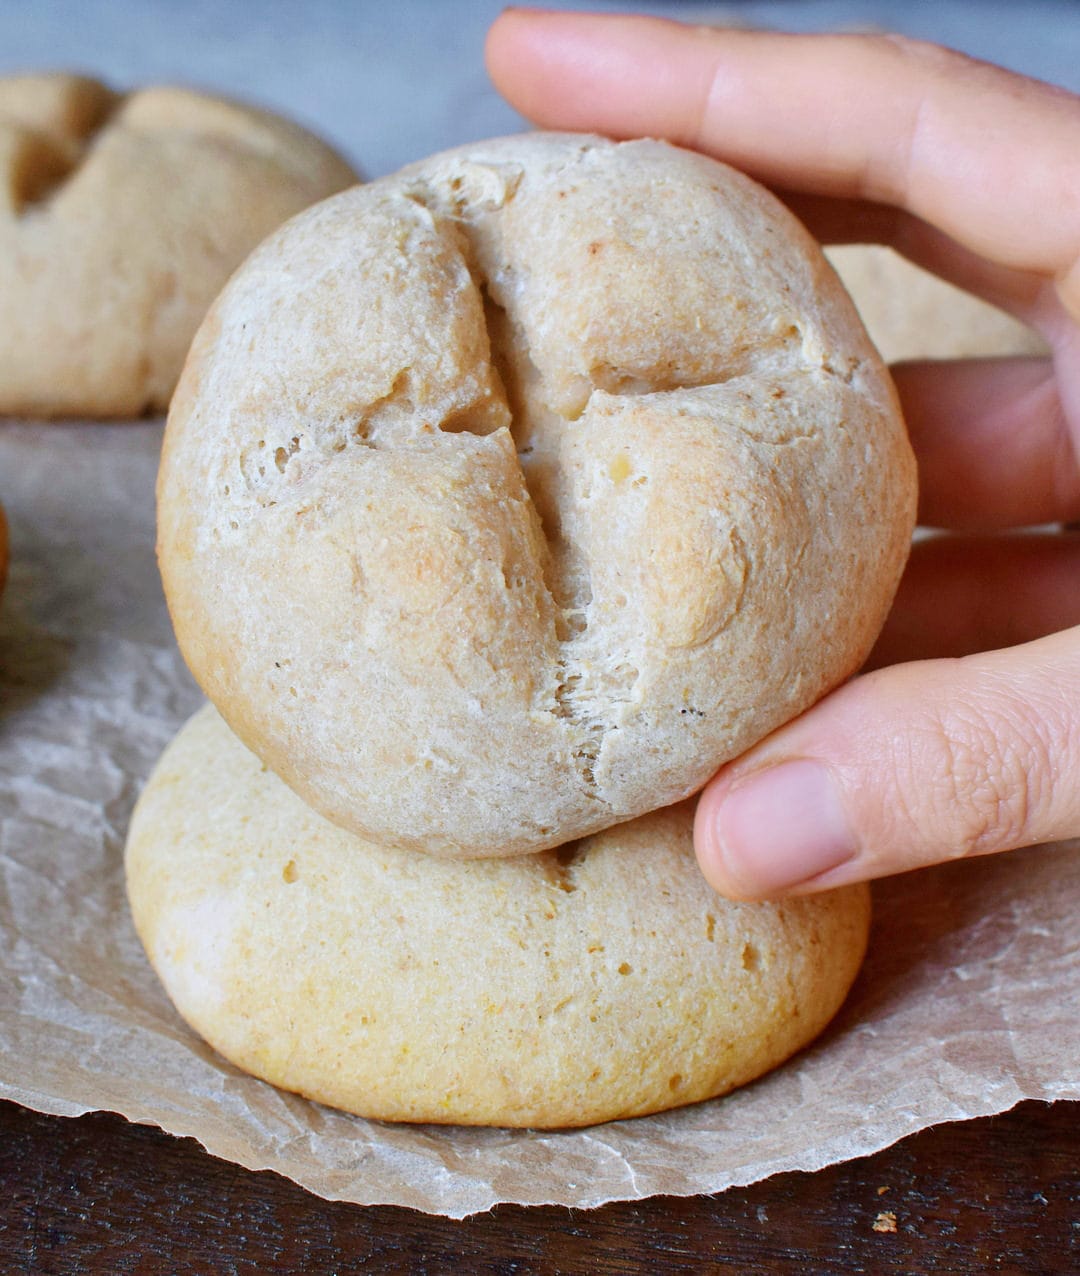 holding soft vegan gluten-free buns (bread rolls)